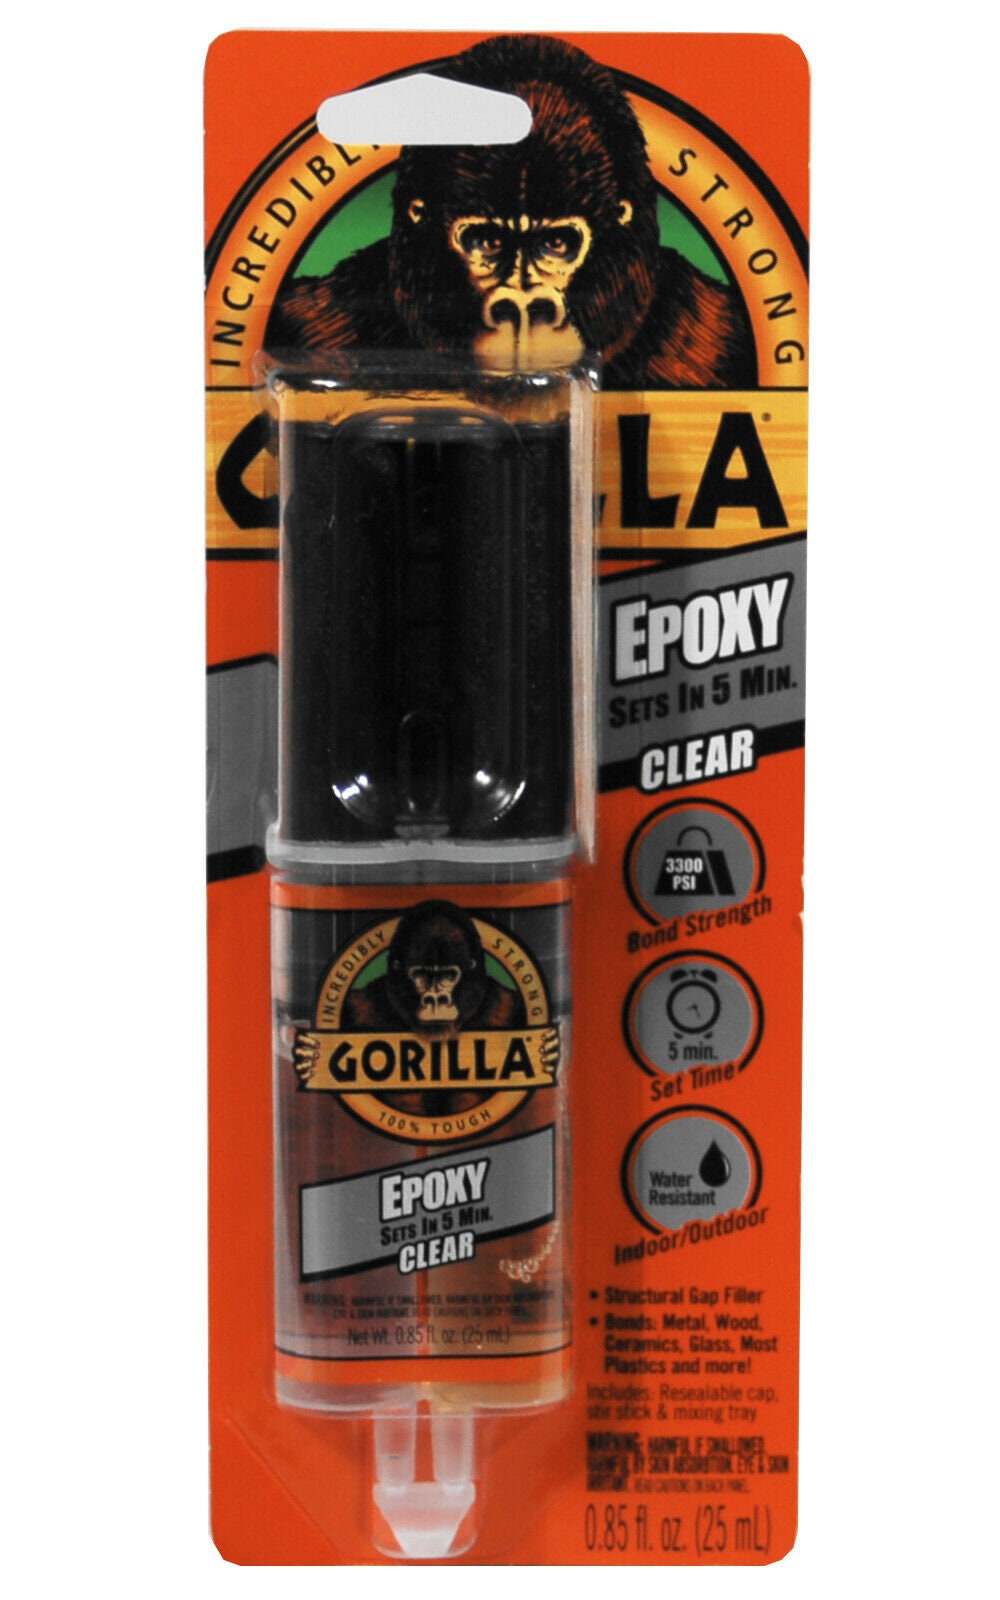 Original Gorilla Glue - 4 fl. oz.